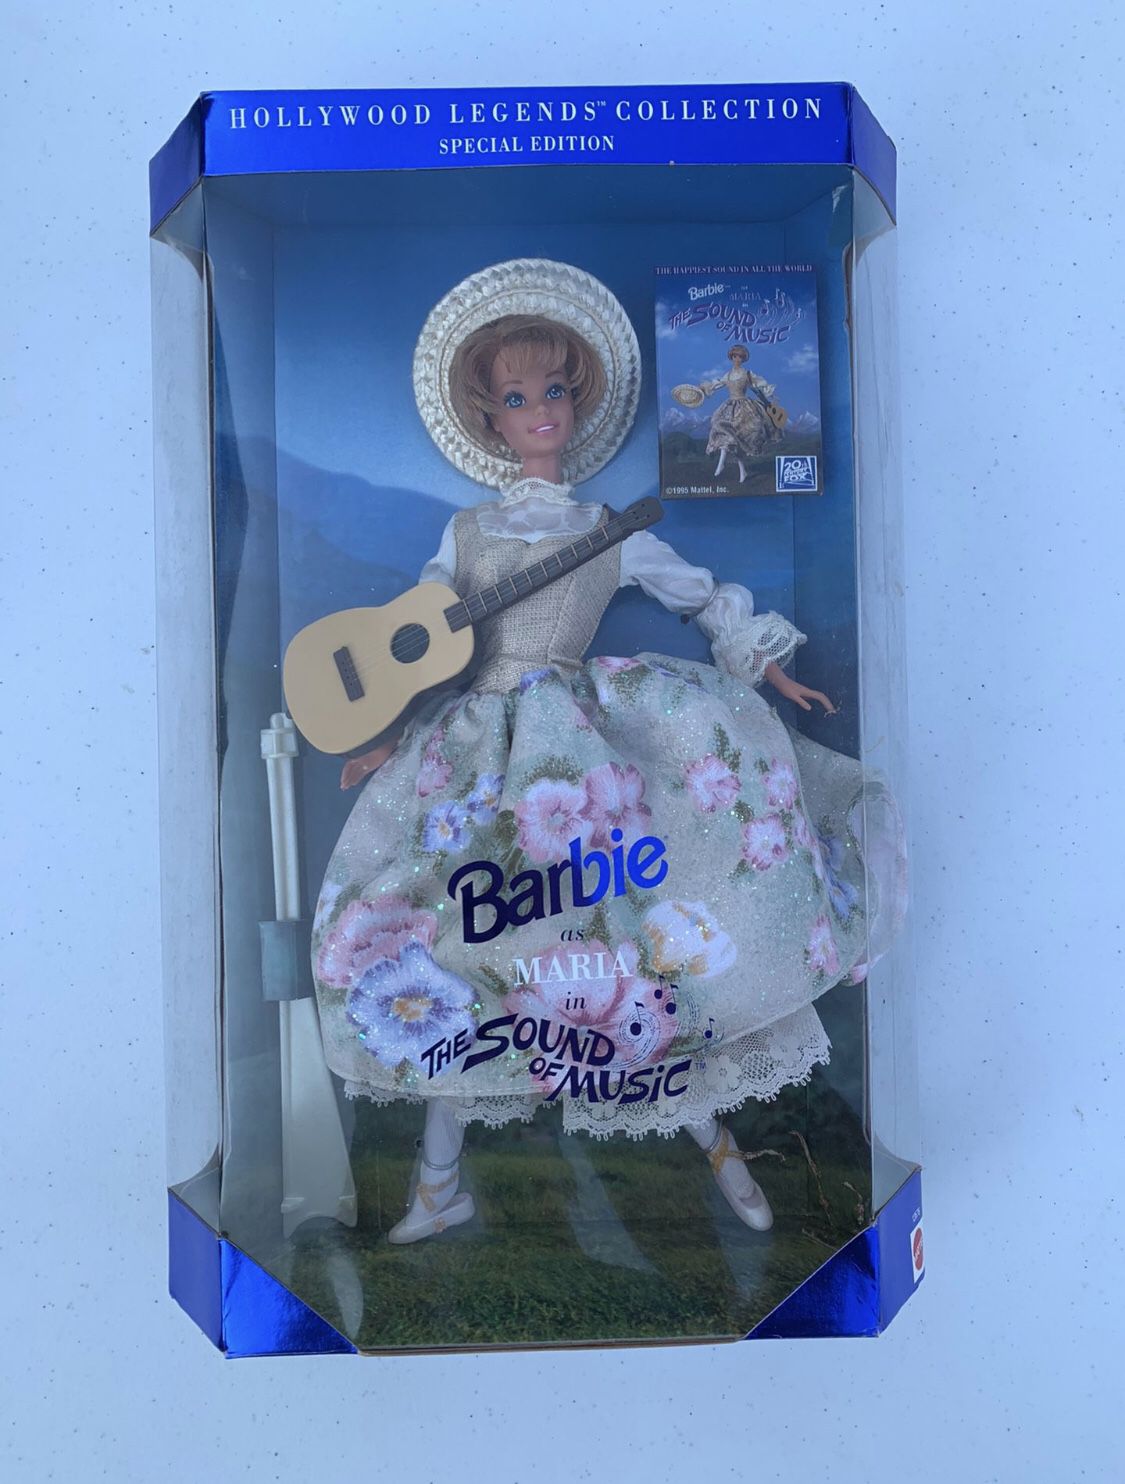 Vintage Barbie. 1995 Sound of Music Maria Barbie.